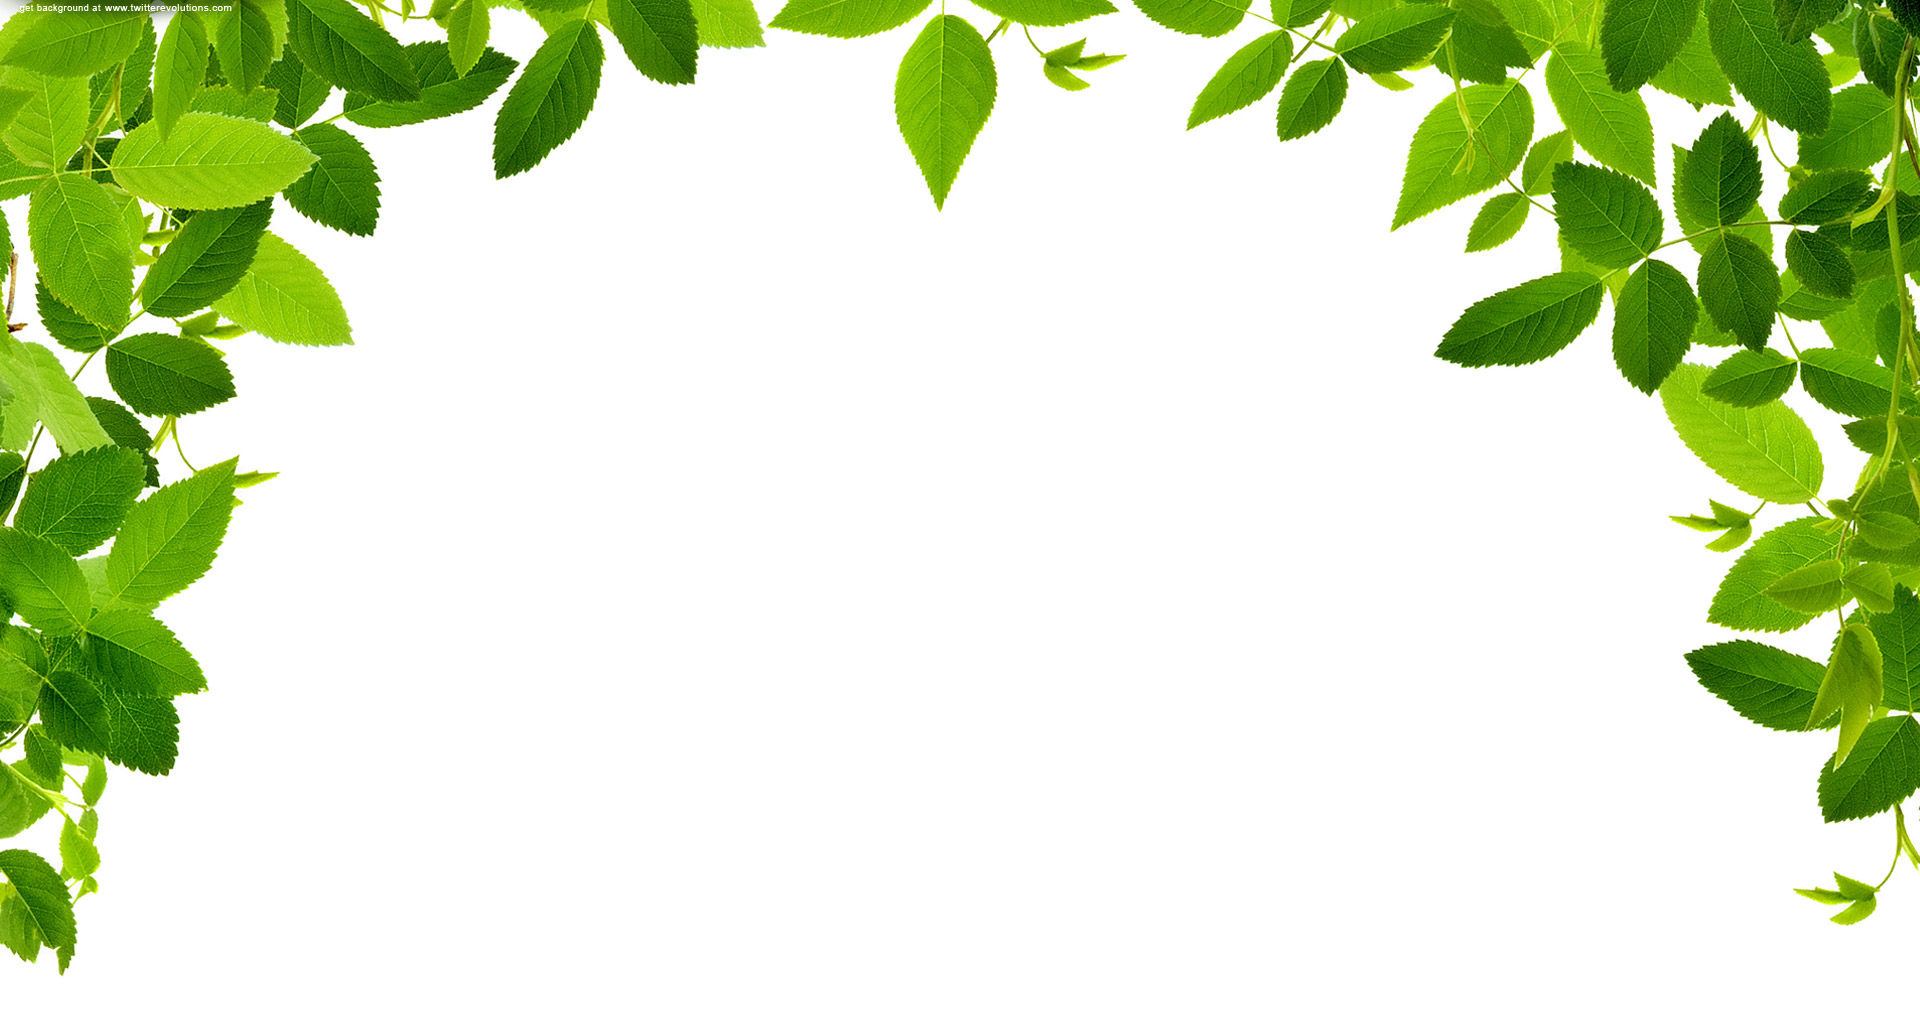 Jungle Leaves Background Clipart - Jungle Leaf, Transparent background PNG HD thumbnail